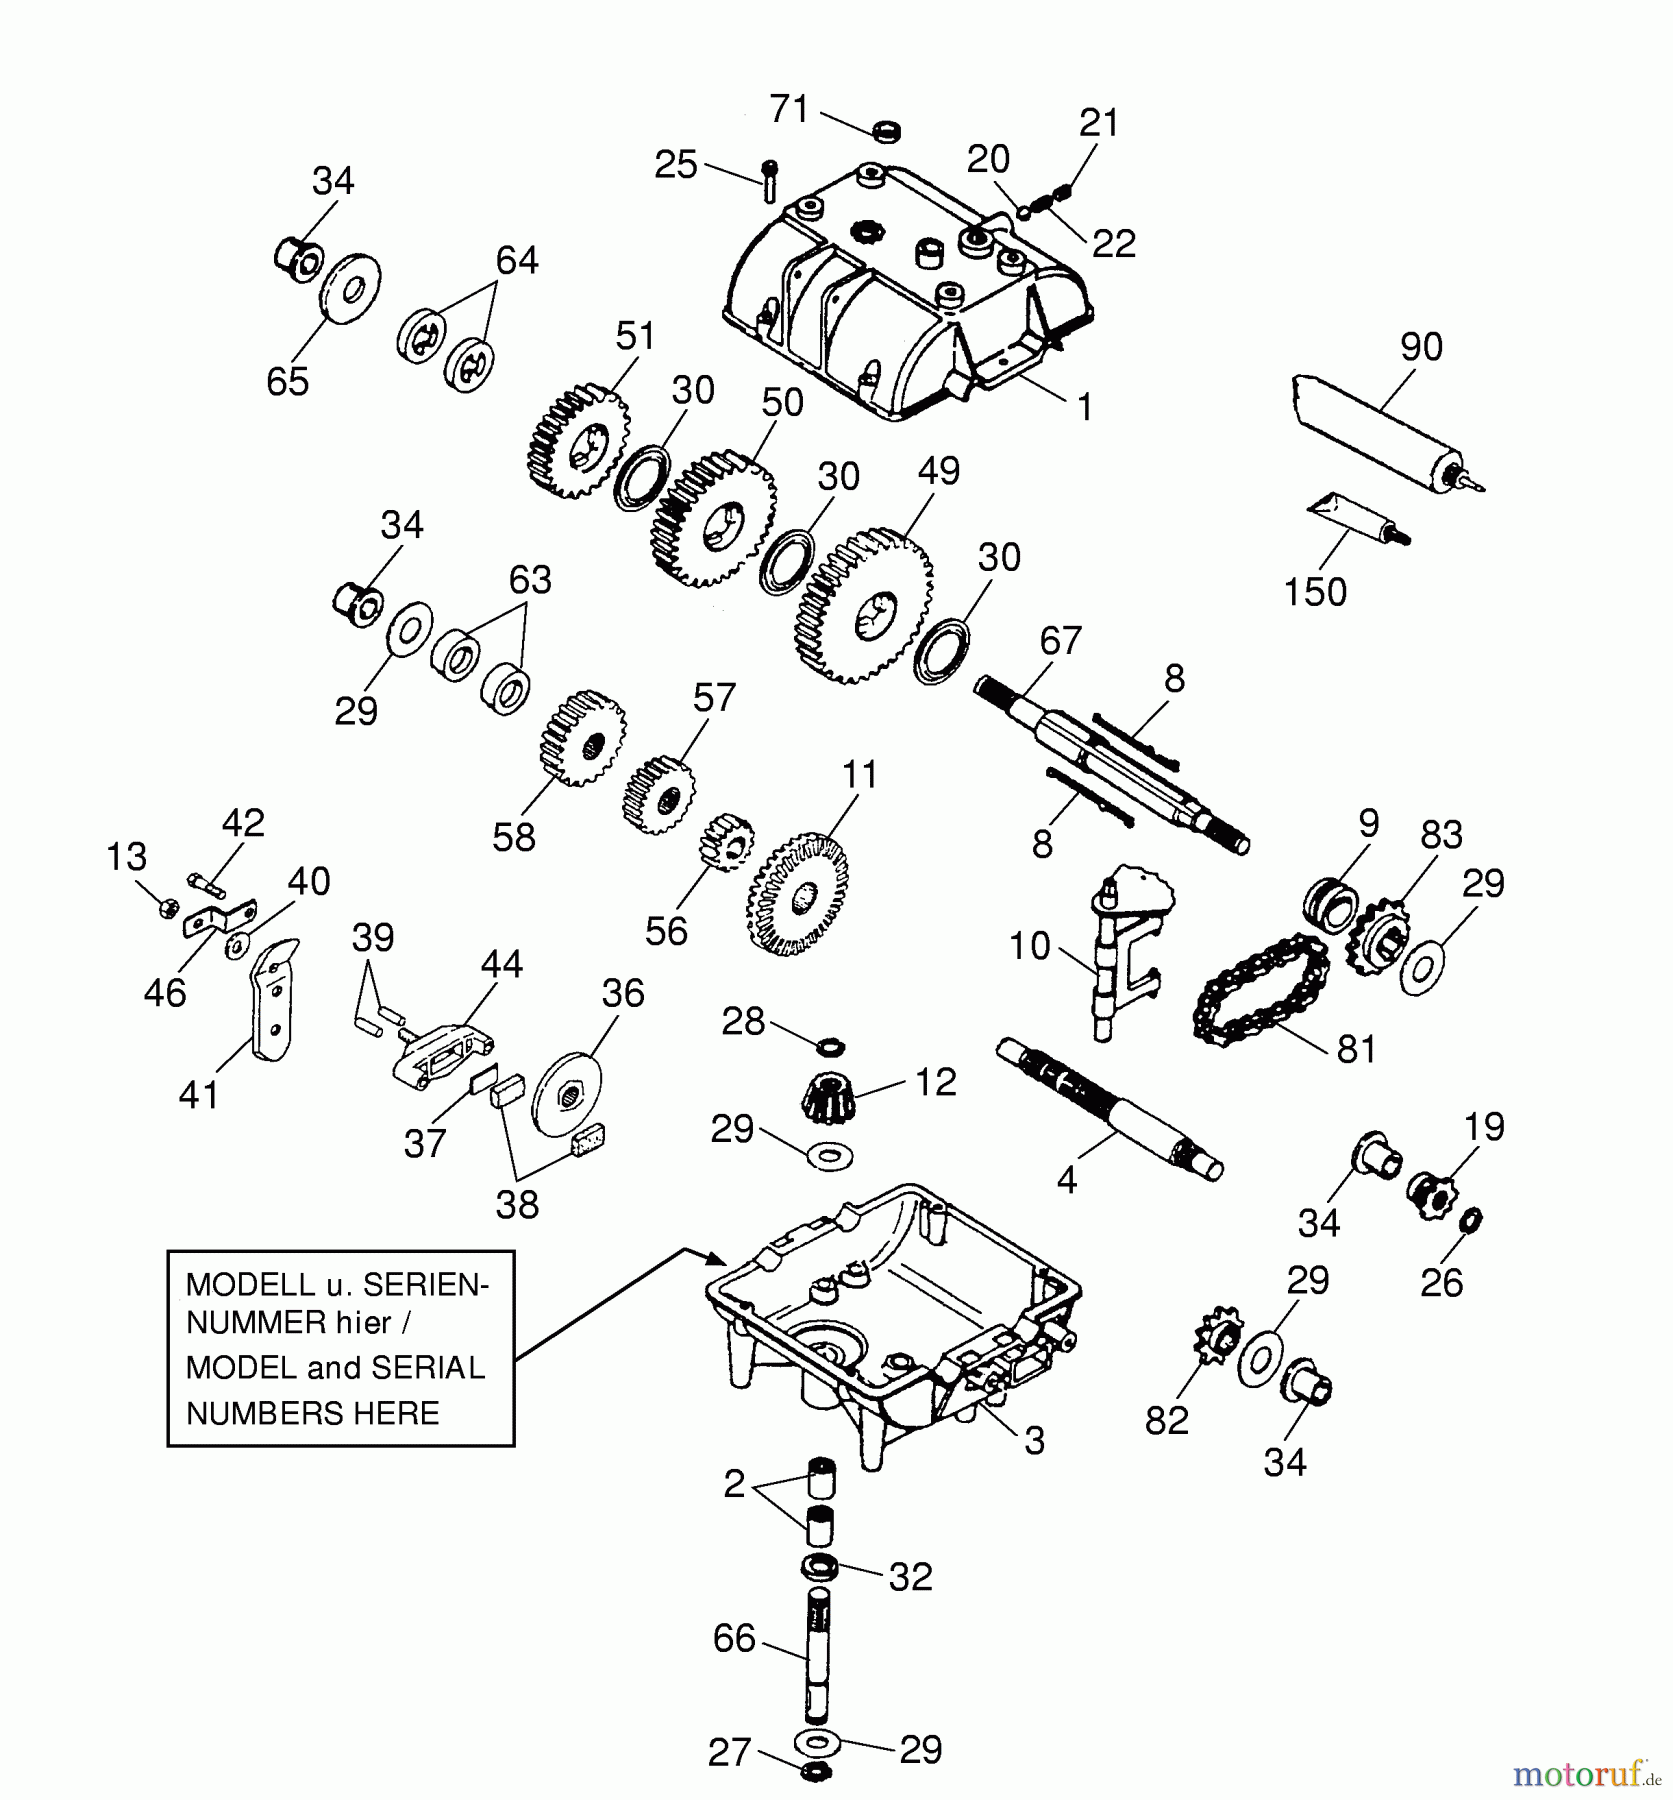  Wolf-Garten Scooter OHV 3 6995000 Series C  (2003) Gearbox